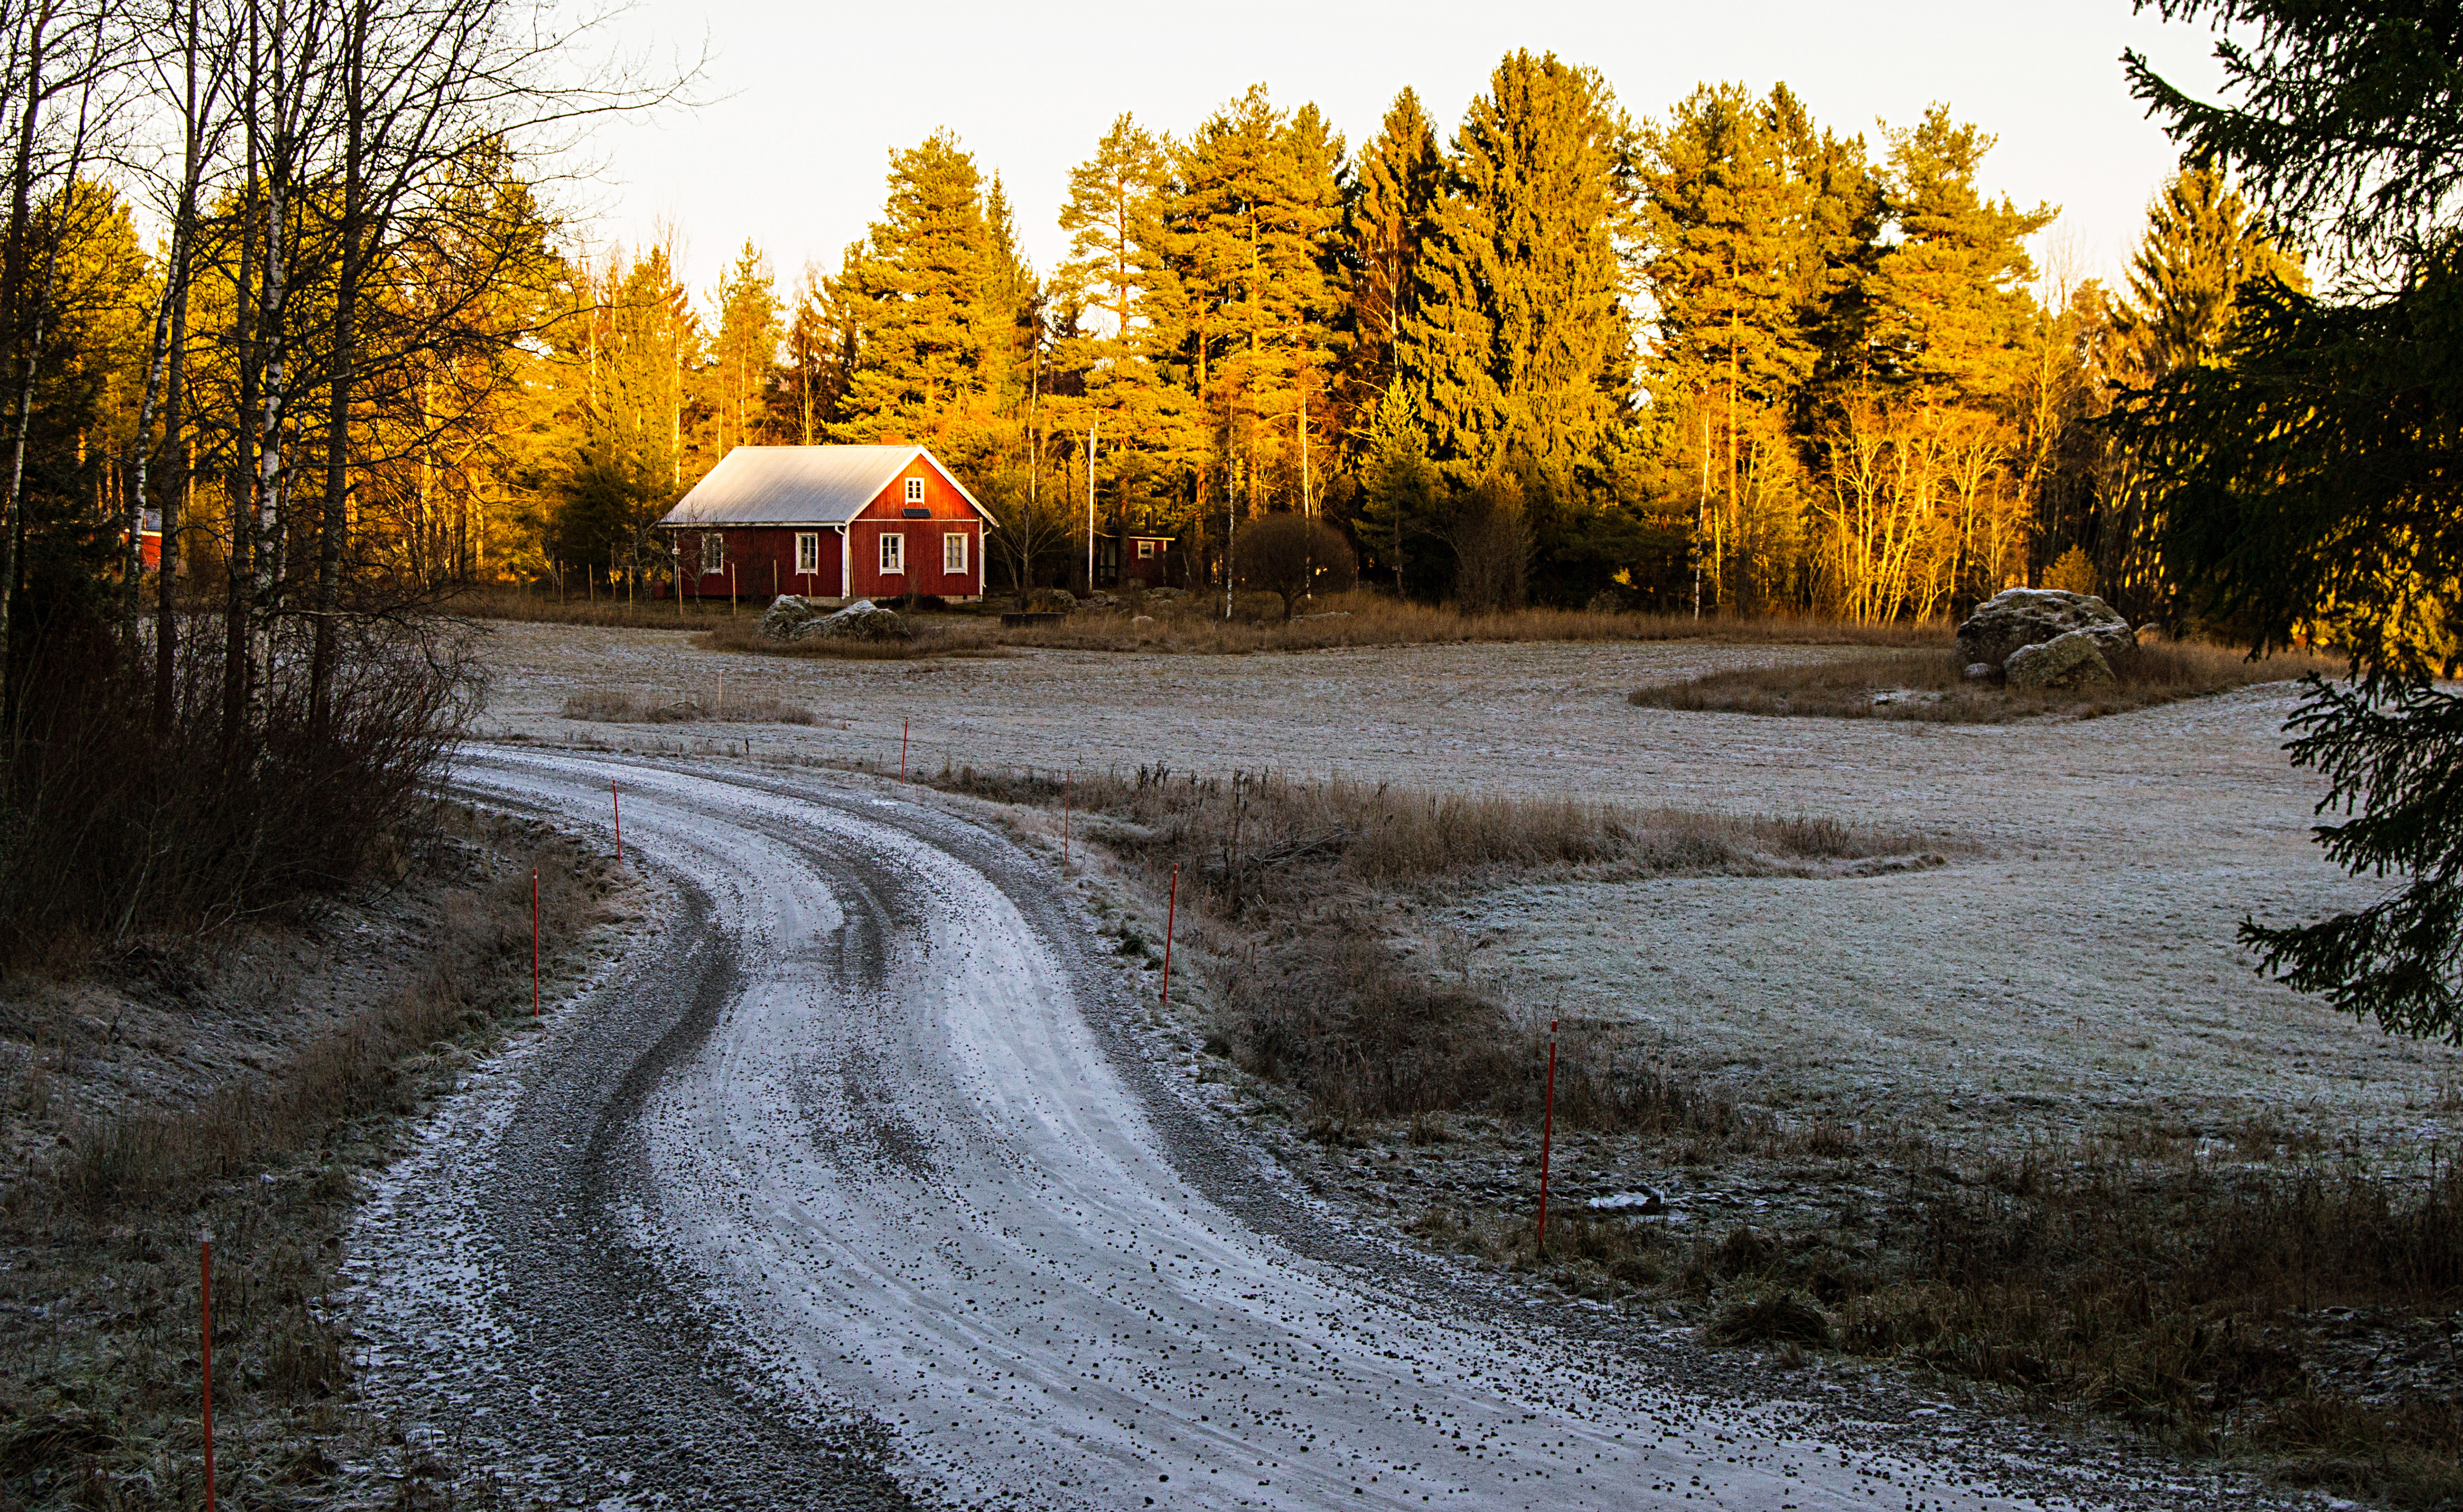 Farmhouse on snowy driveway landscape image - Free stock ...